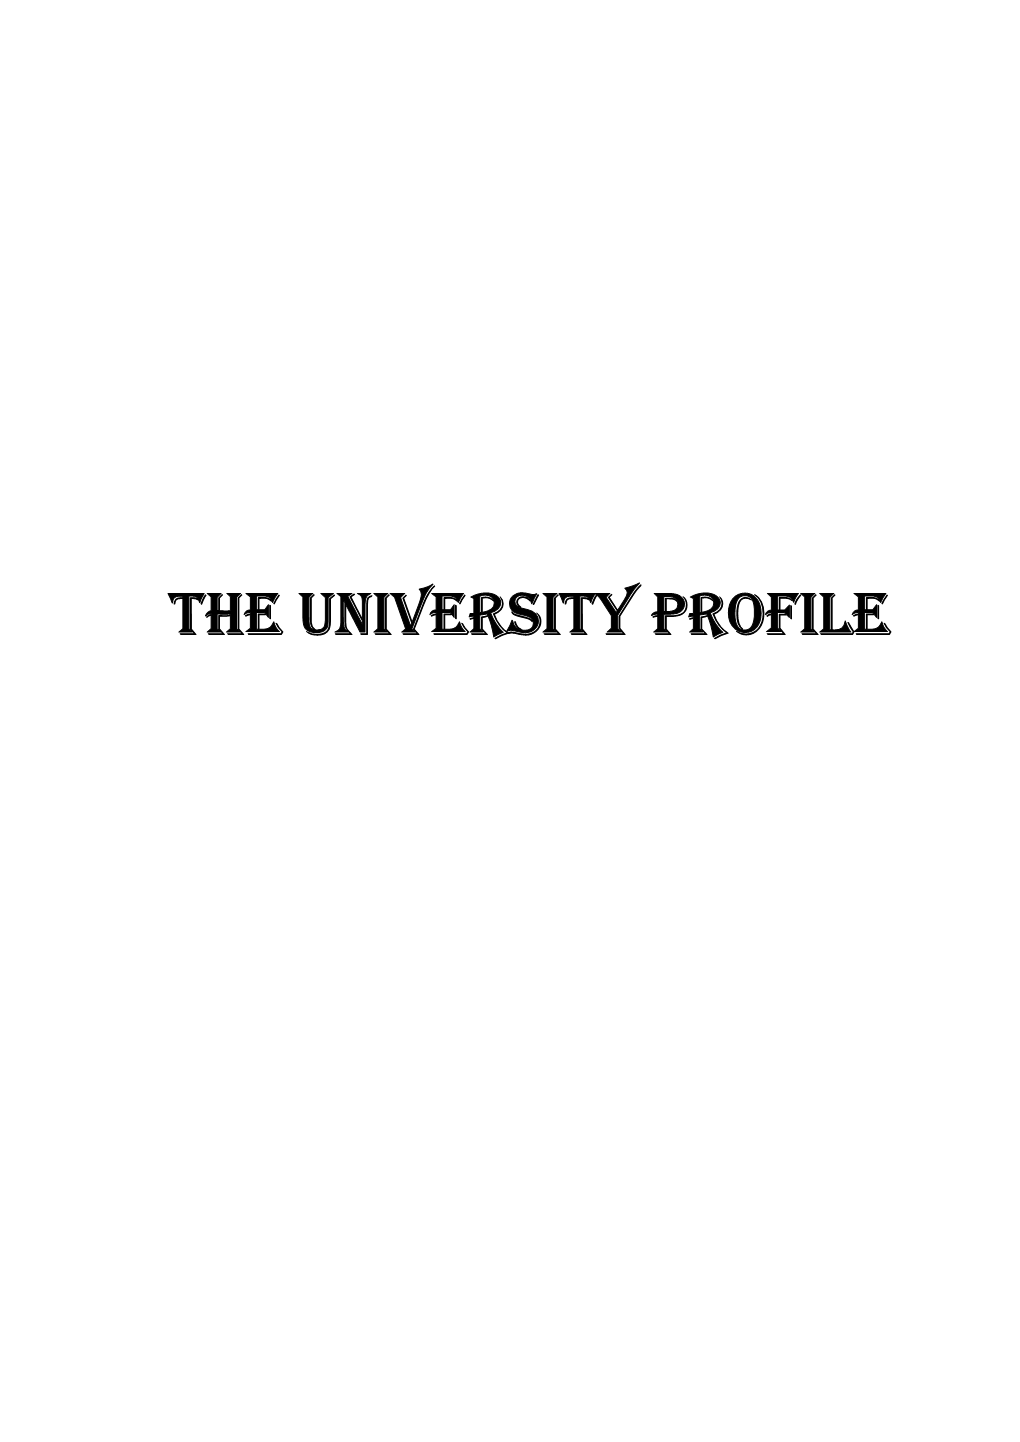 The University Profile